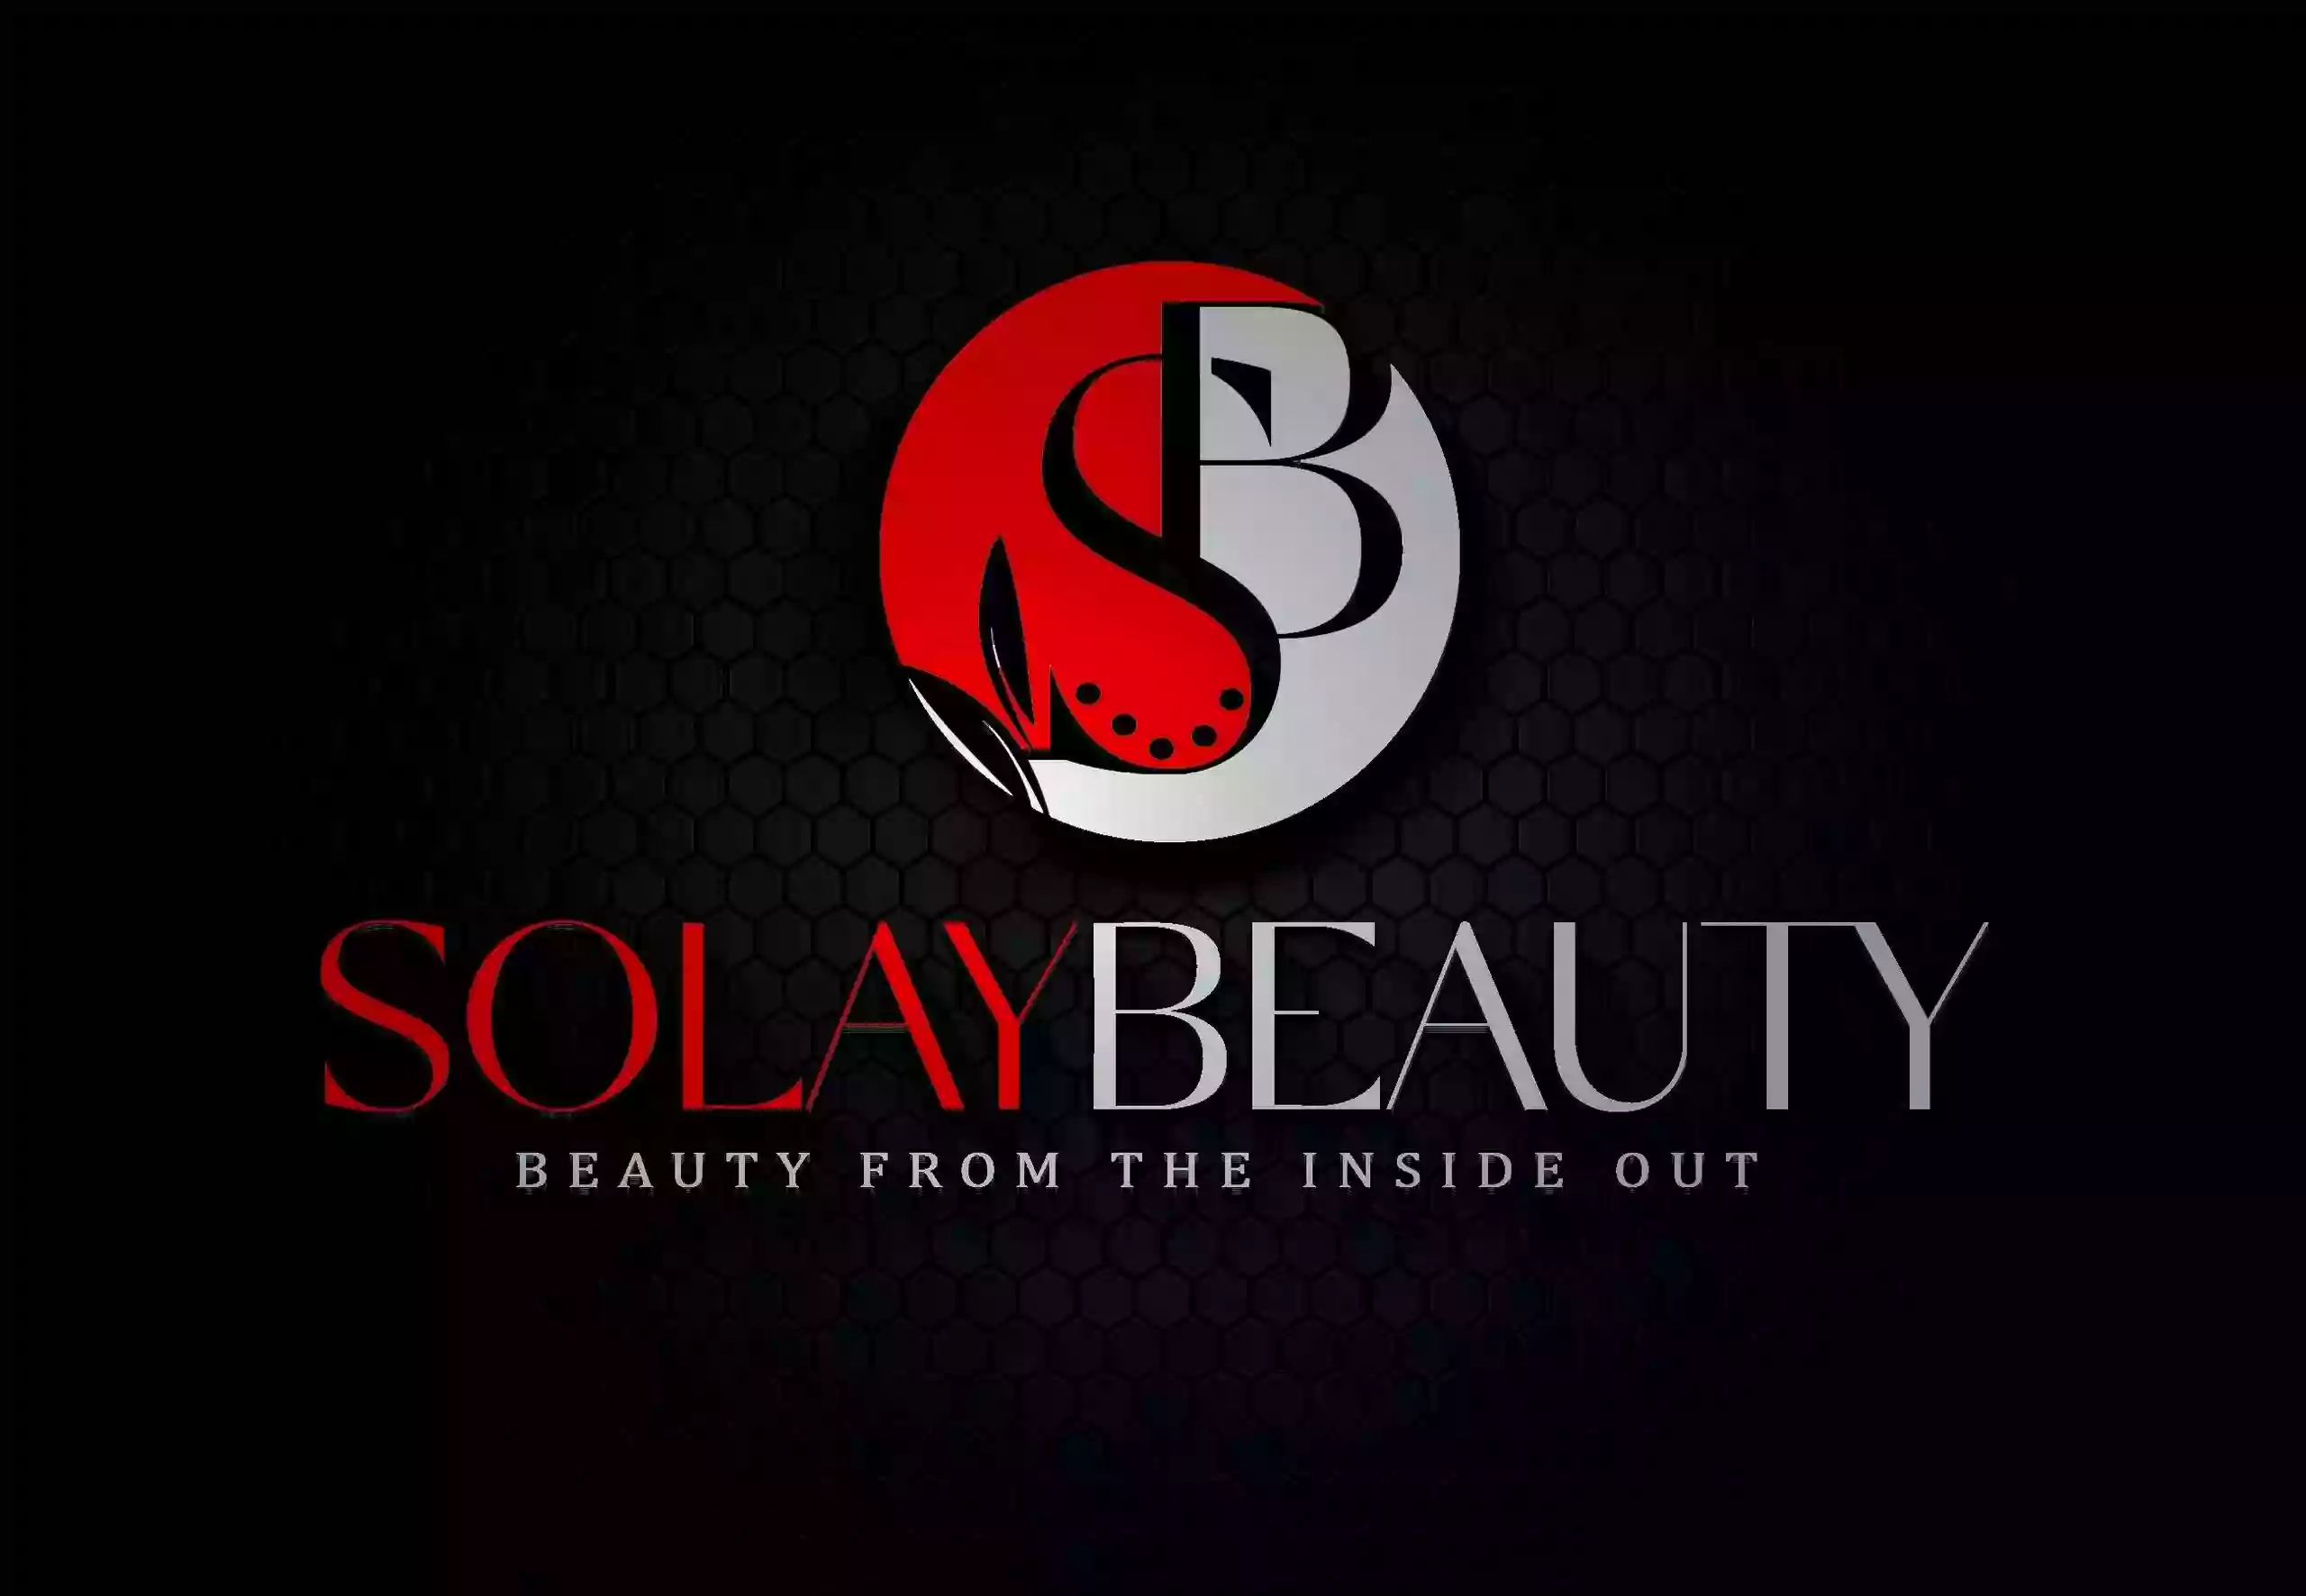 SoLay Beauty, LLC